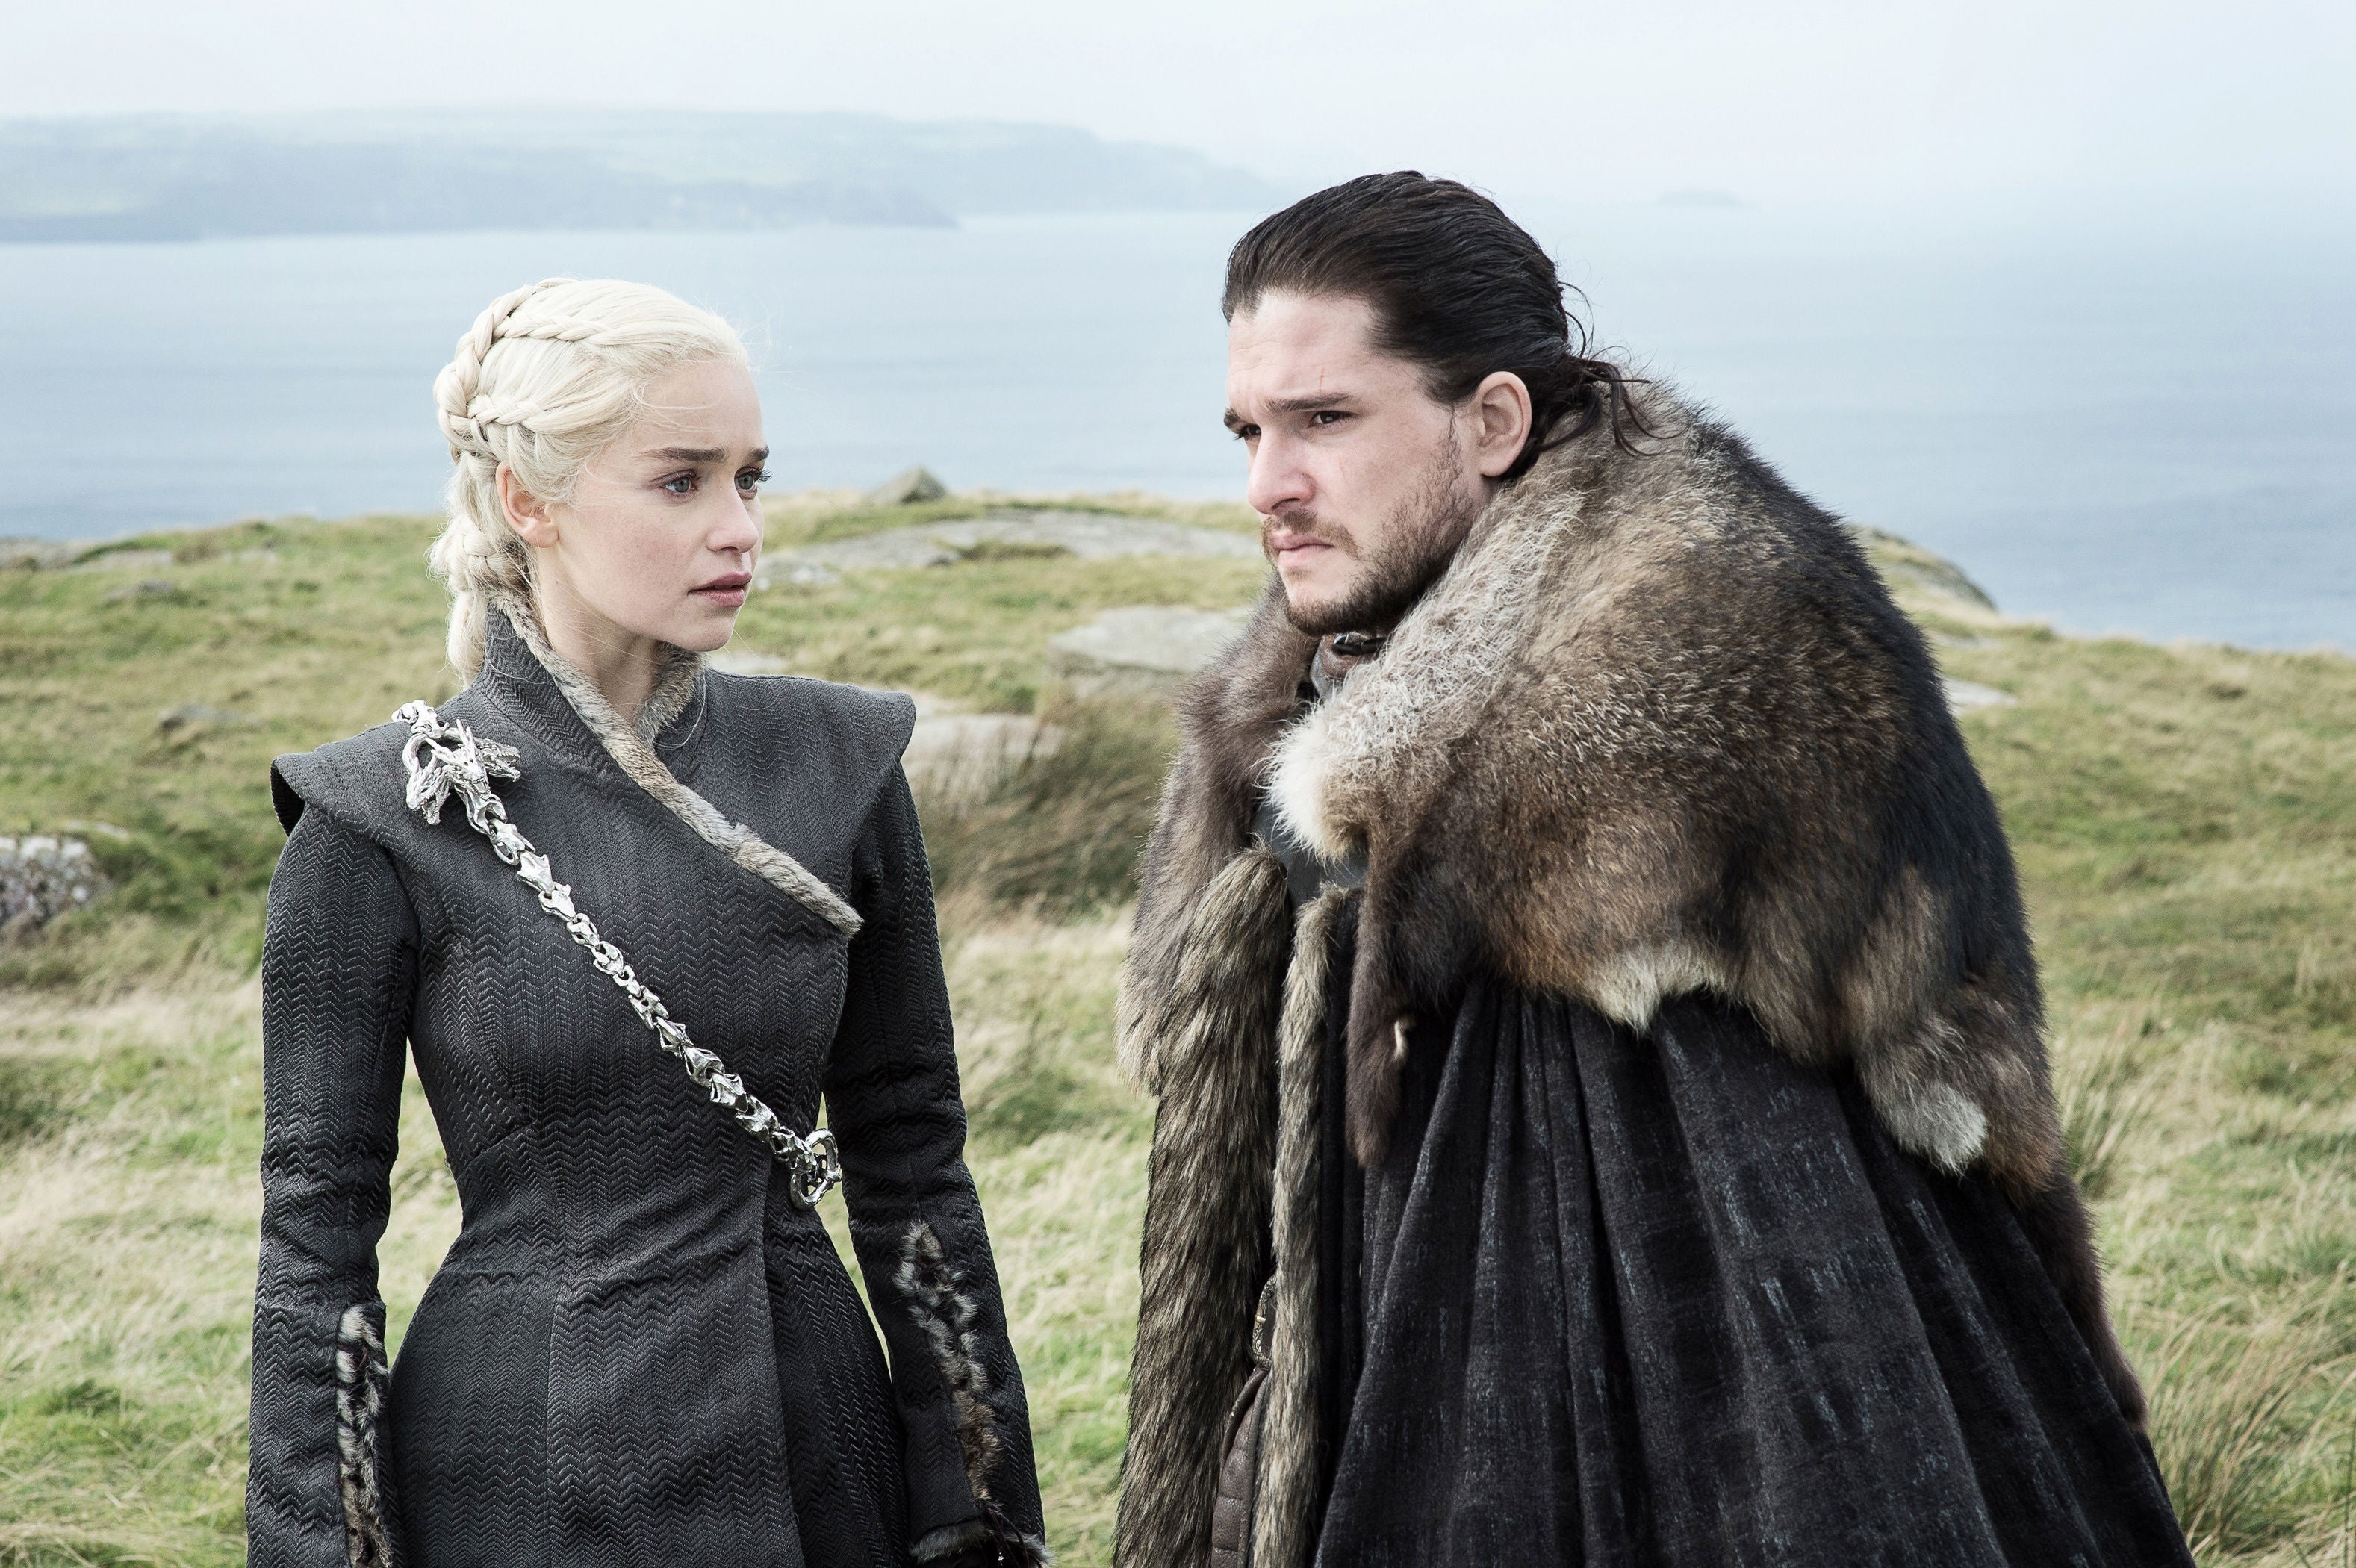 Kit Harington, right, as Jon Snow in ‘Game Of Thrones’ alongside Emilia Clarke as Daenerys Targaryen